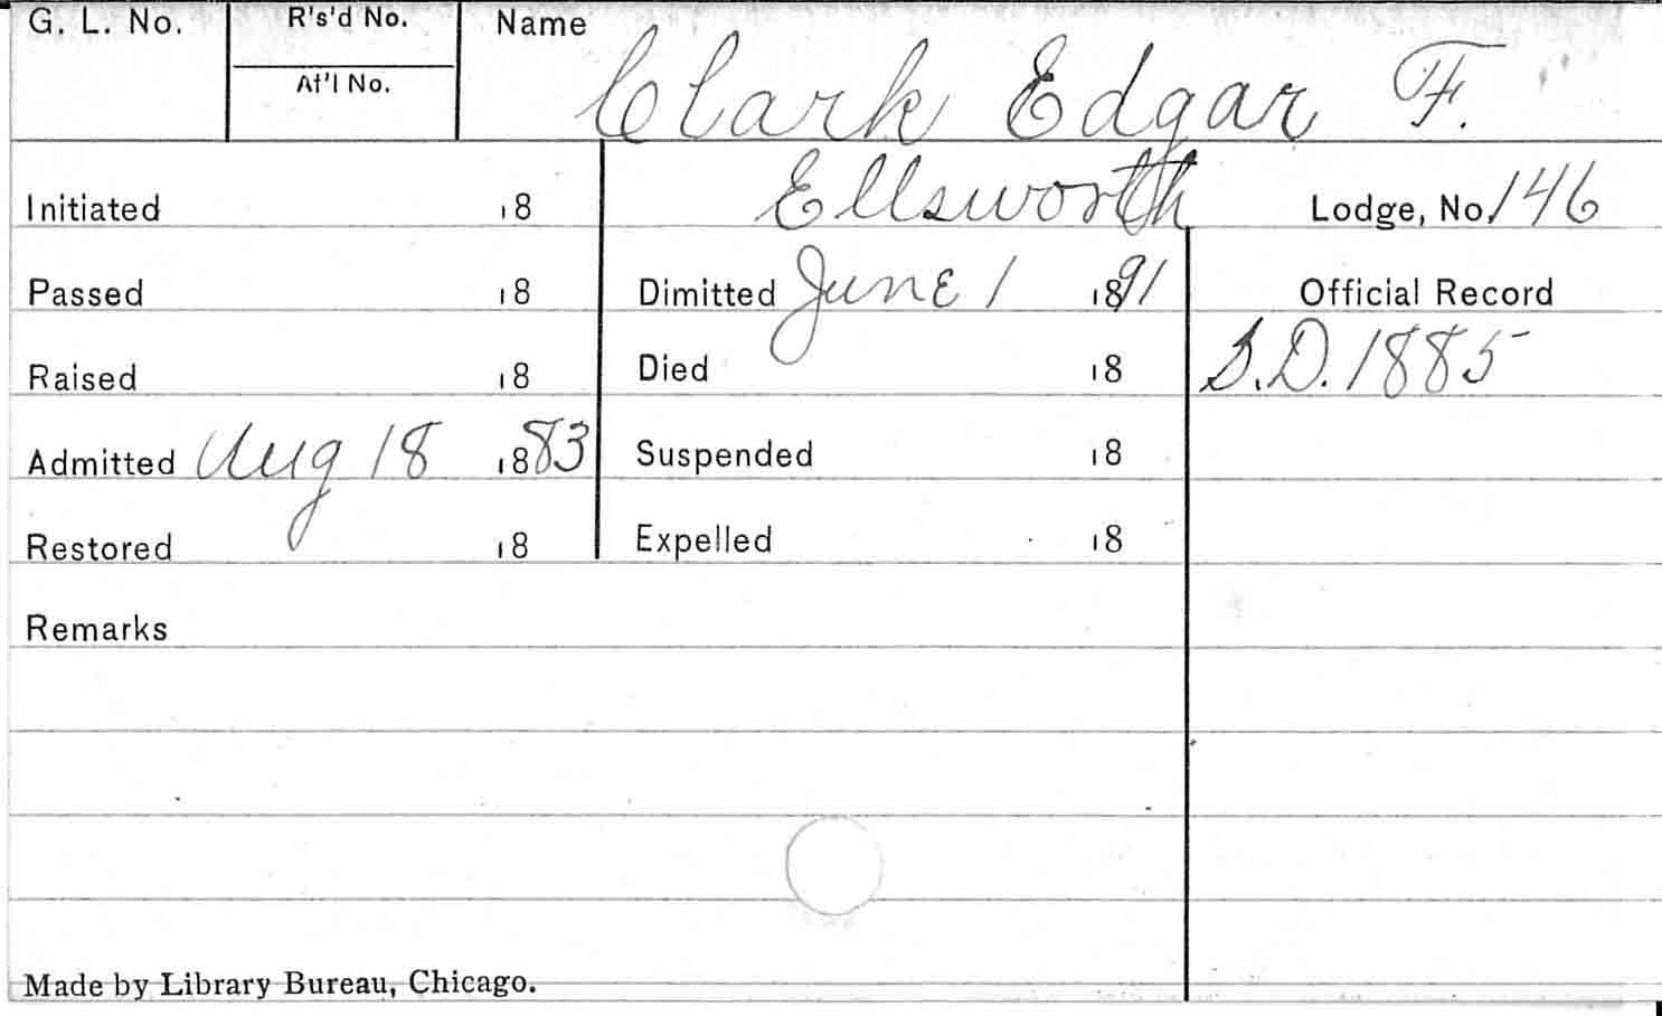 Edgar F. Clark's membership record from the Grand Lodge of Kansas (